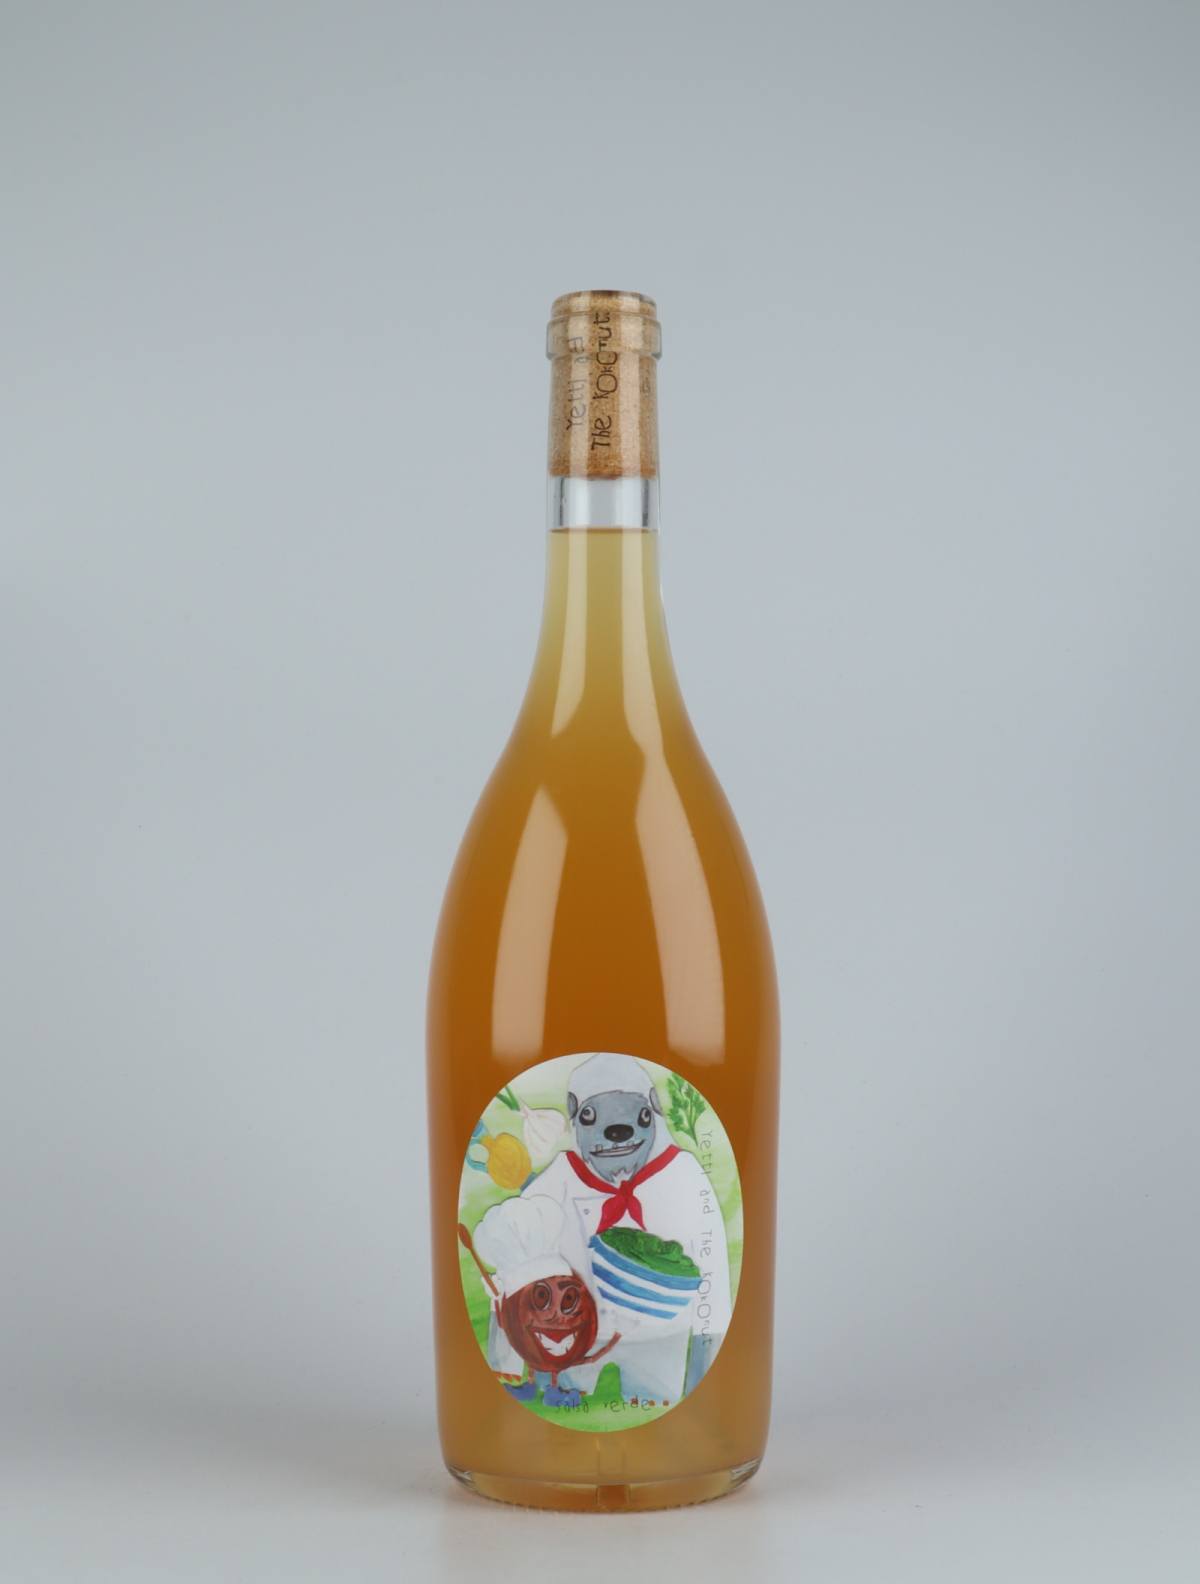 A bottle 2020 Salsa Verde White wine from Yetti and the Kokonut, Barossa Valley in Australia